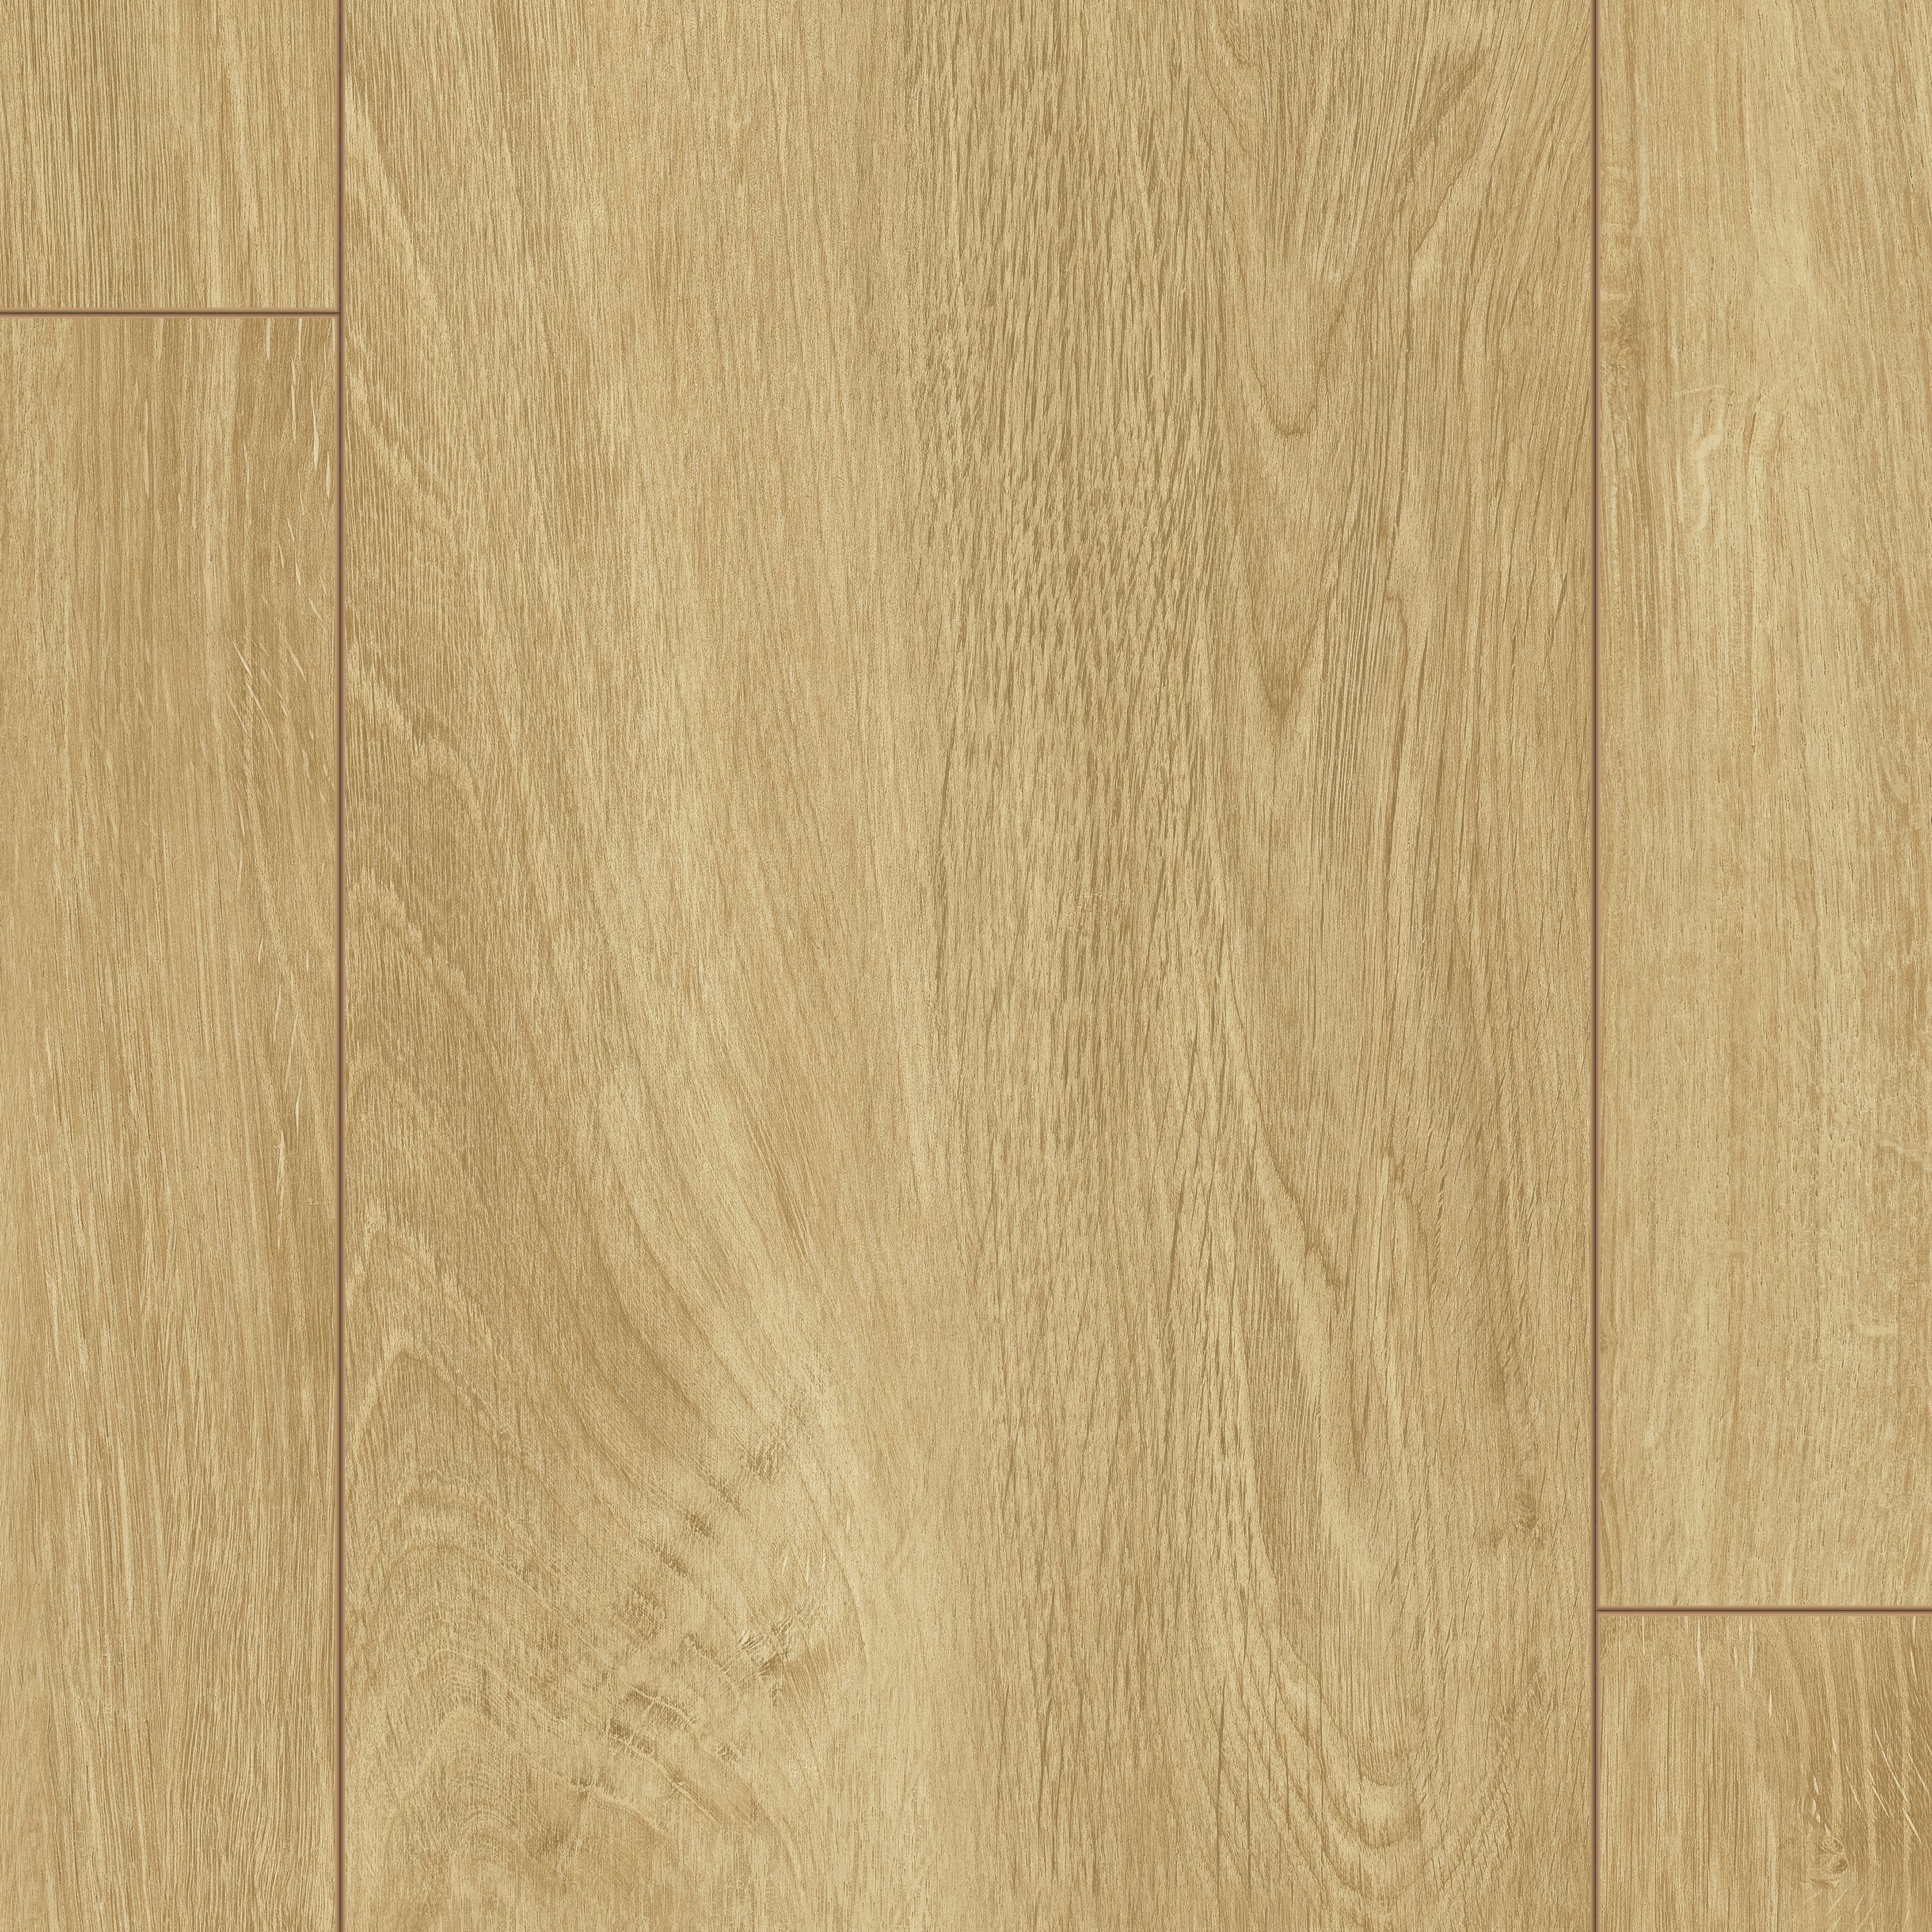 GoodHome Lulea Pure Natural Wood effect Laminate Flooring Sample